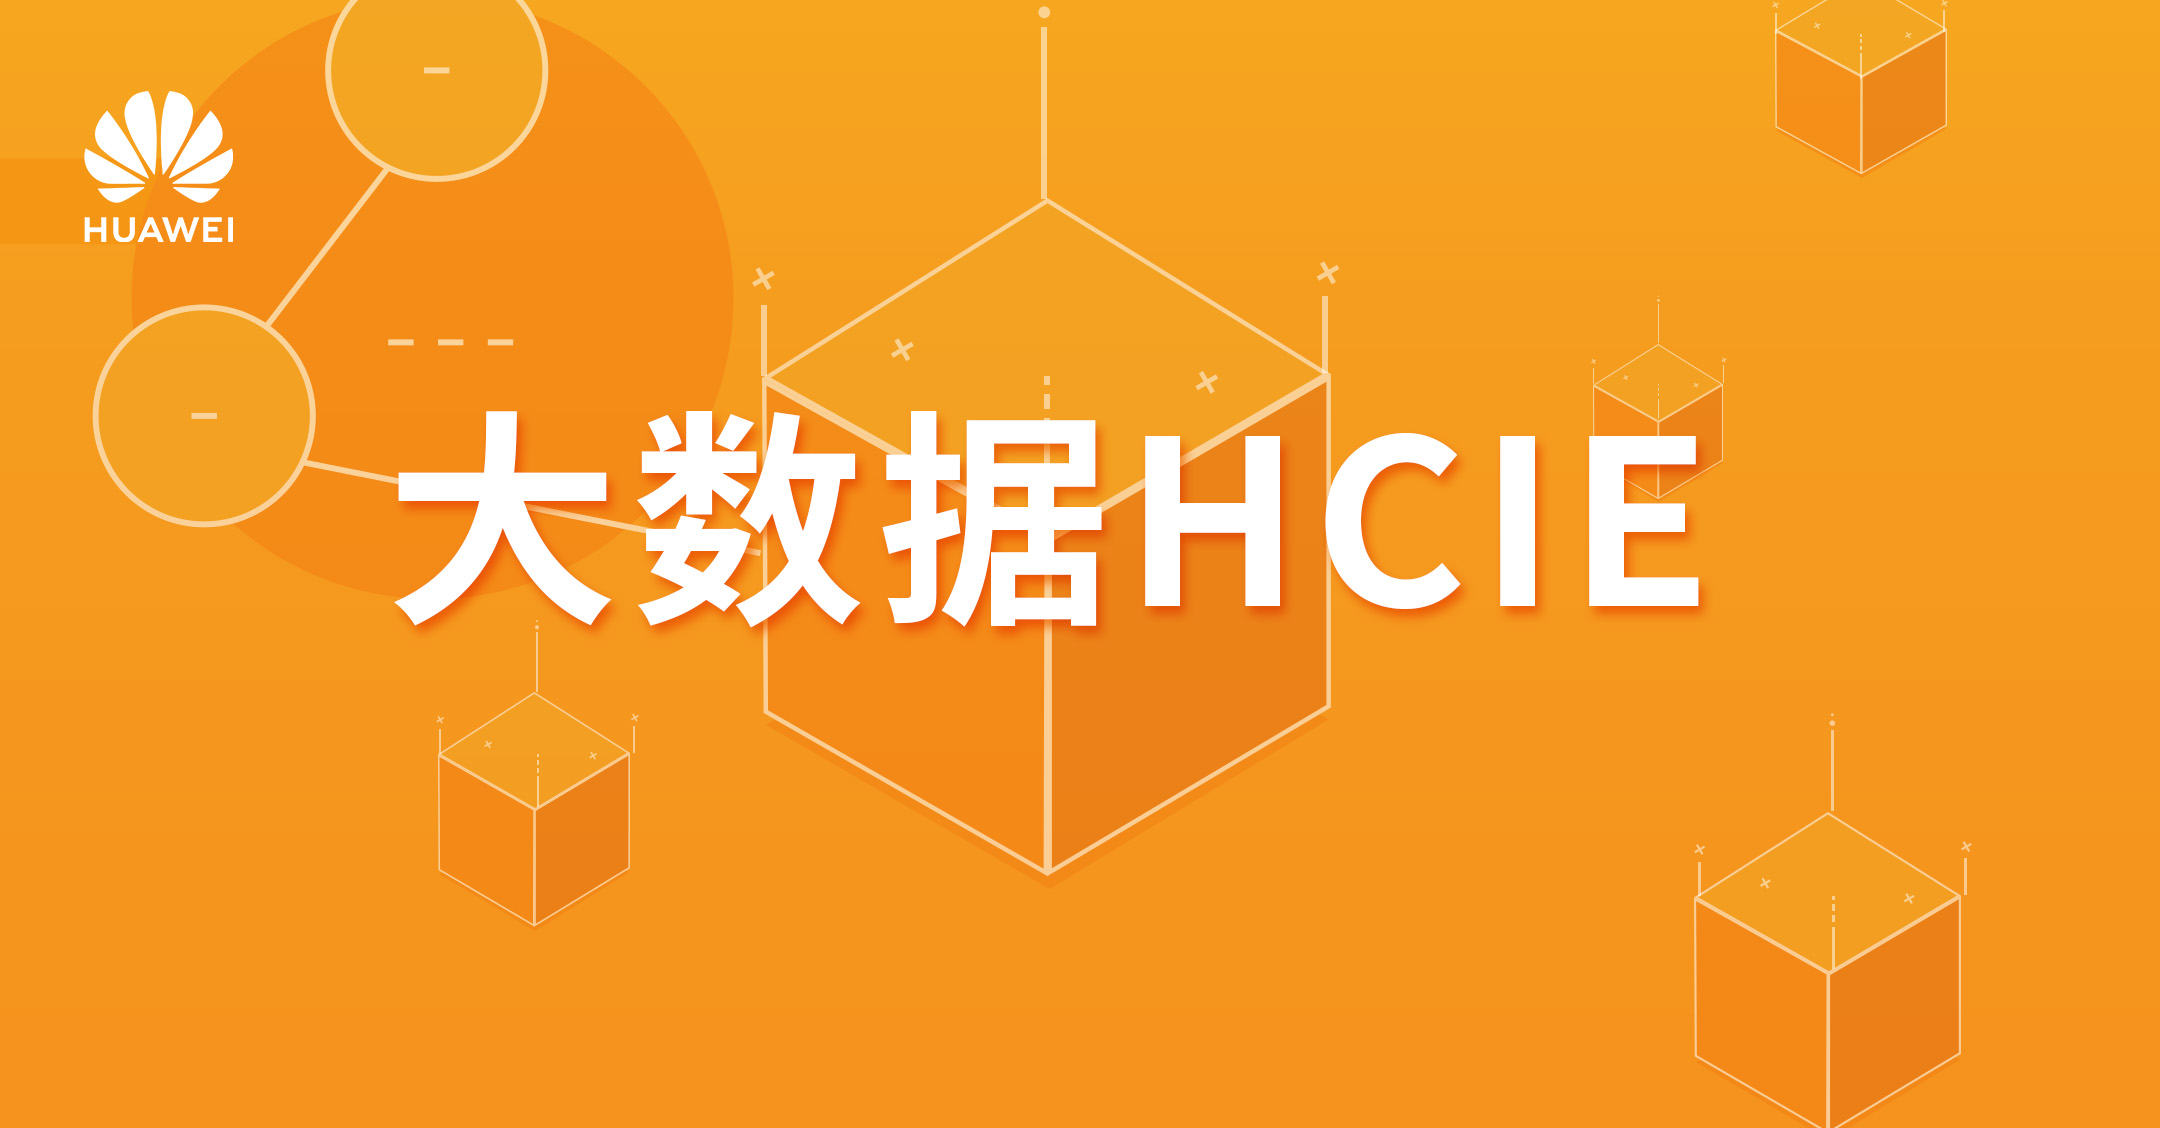 大数据HCIE_V1.0